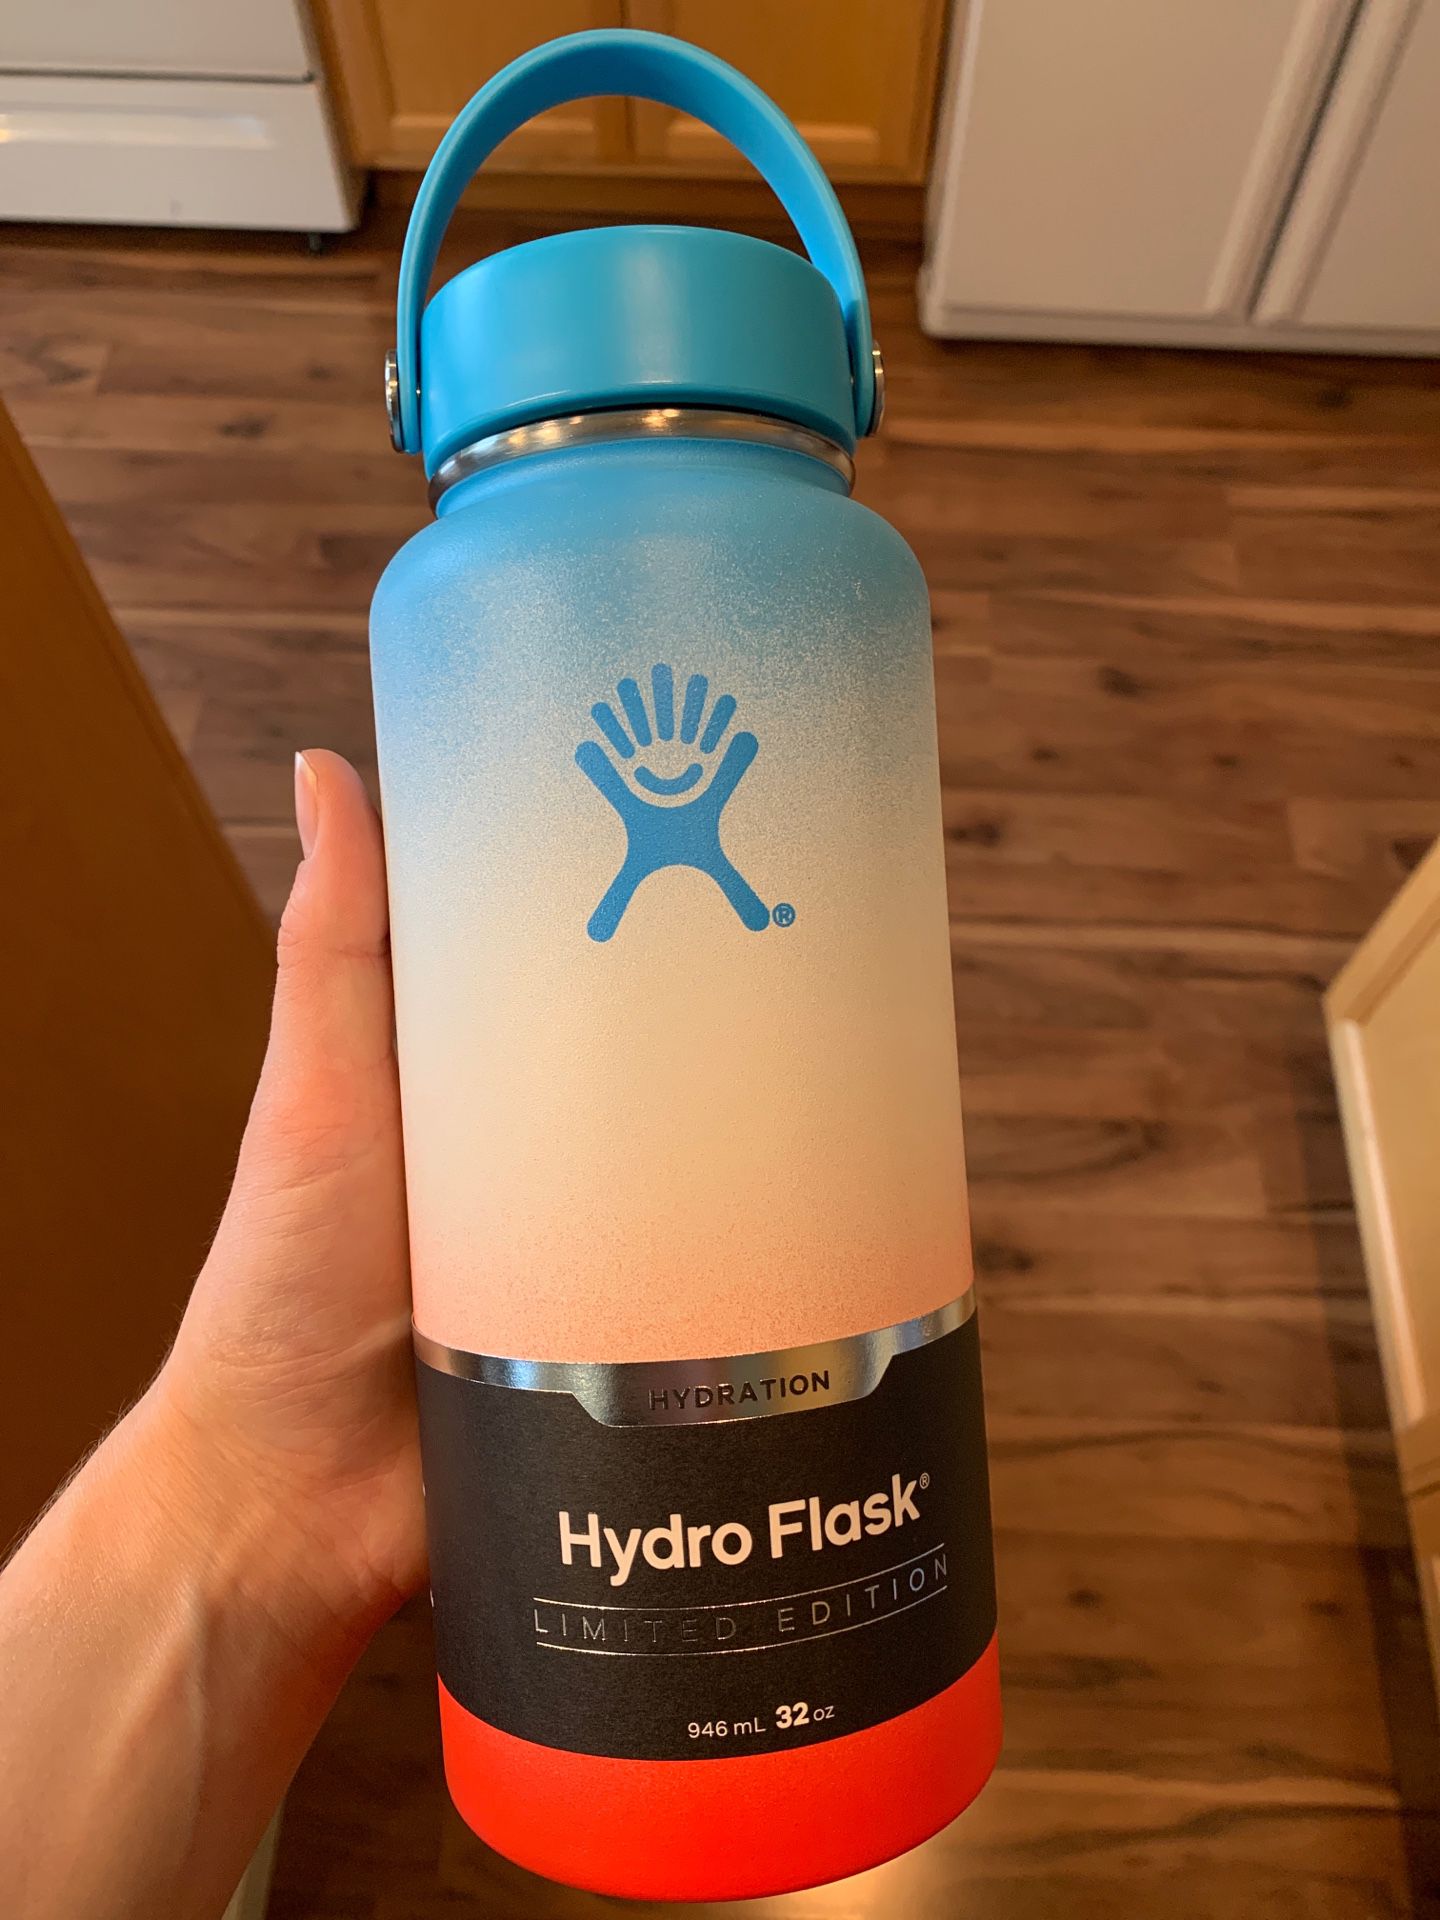 Brand new Hydro Flask